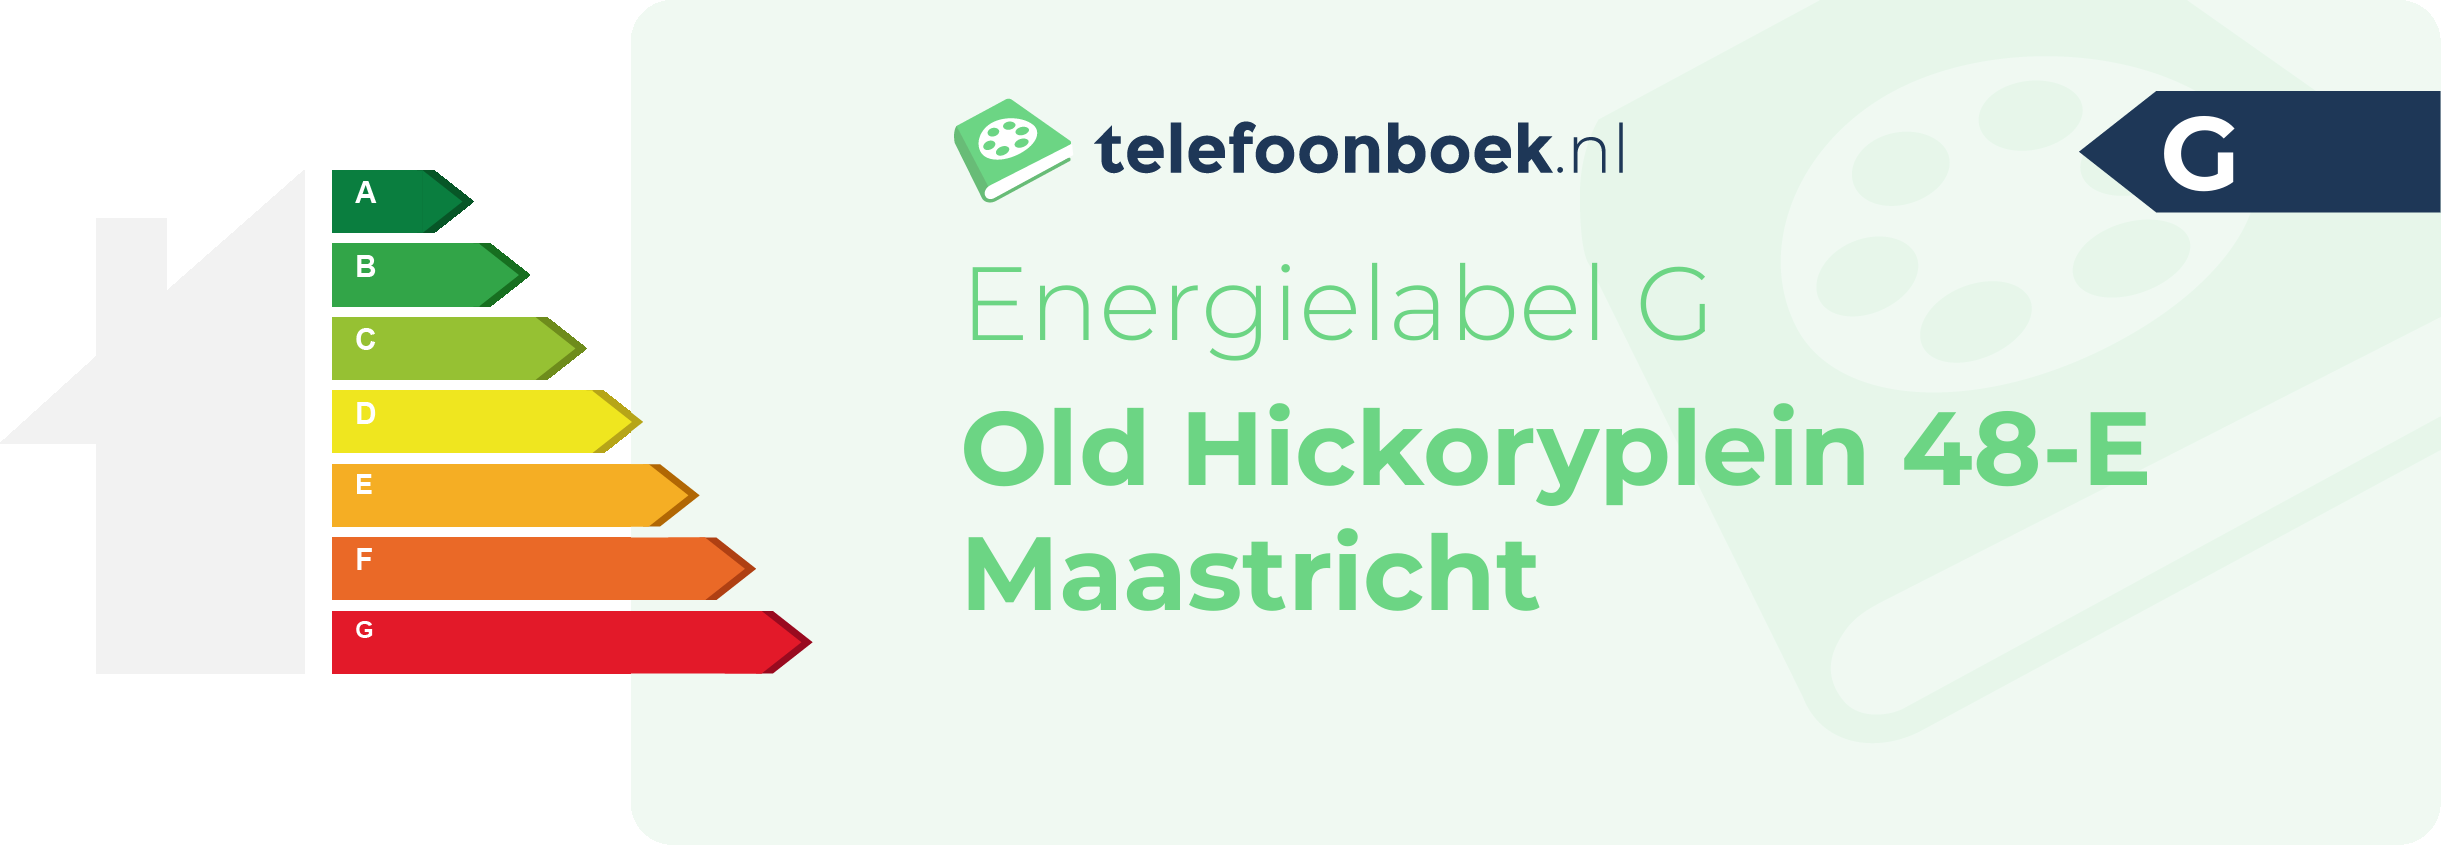 Energielabel Old Hickoryplein 48-E Maastricht